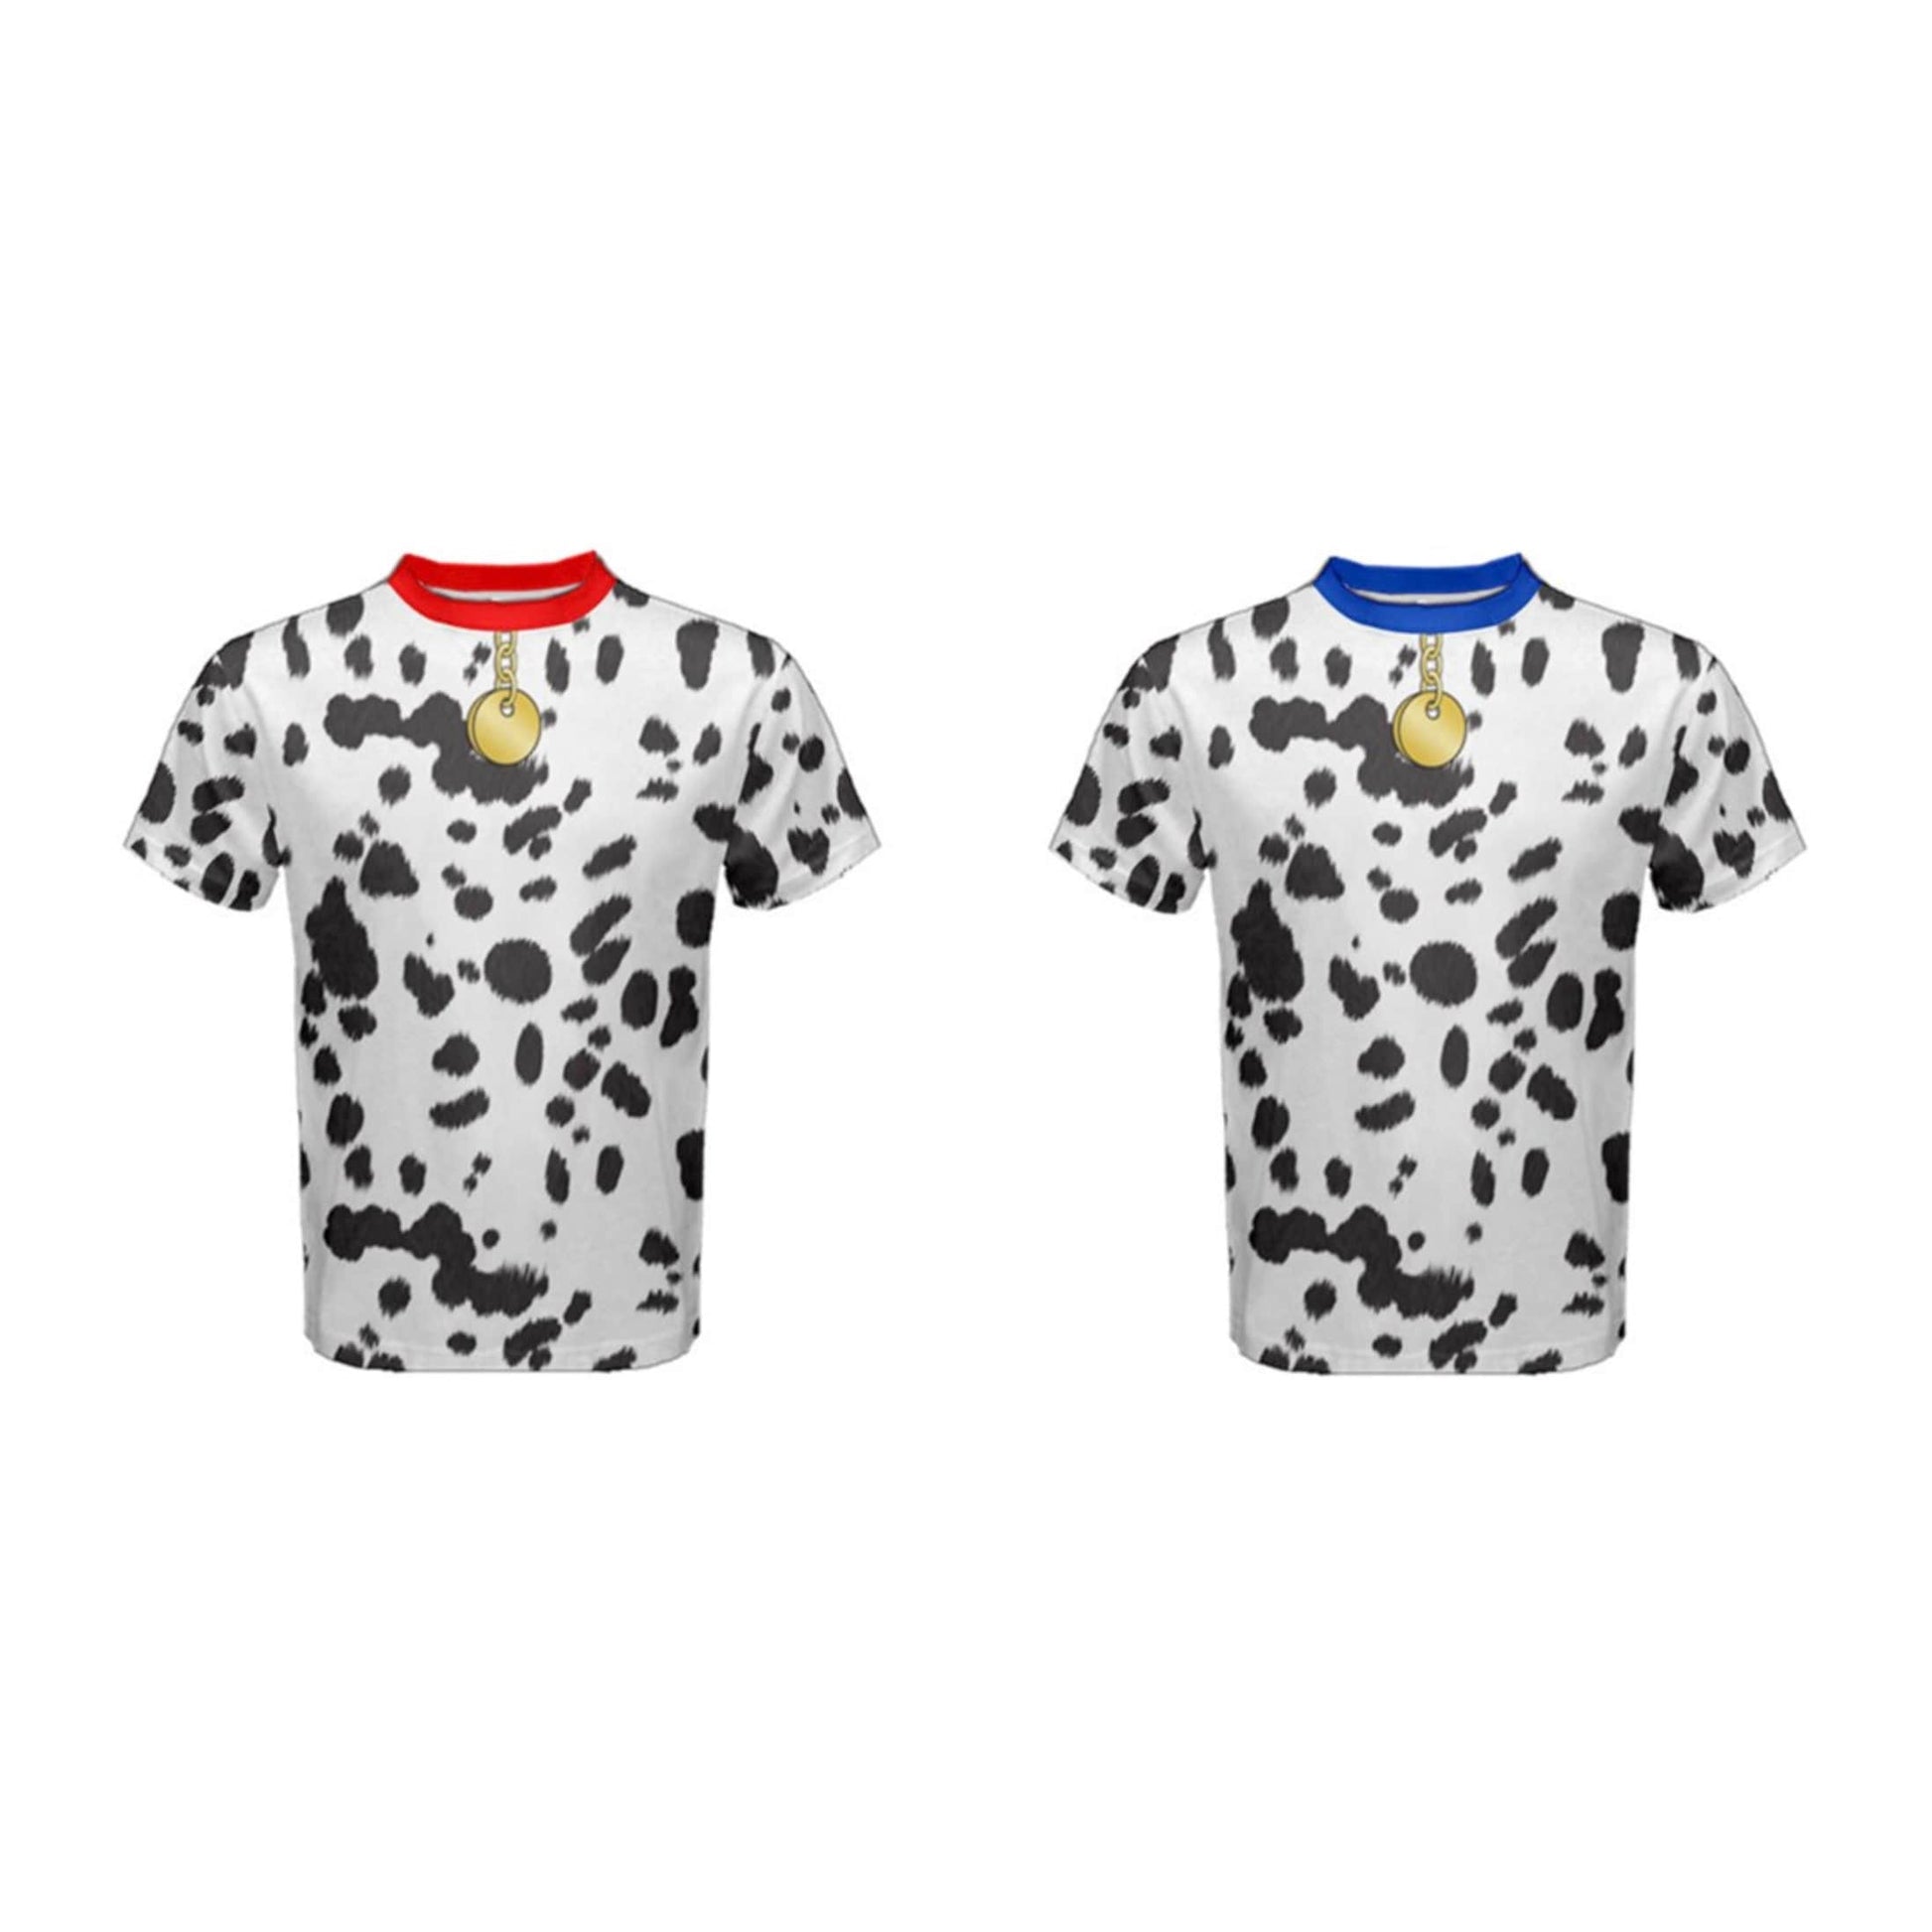 RUSH ORDER: Men's 101 Dalmatians Inspired ATHLETIC Shirt